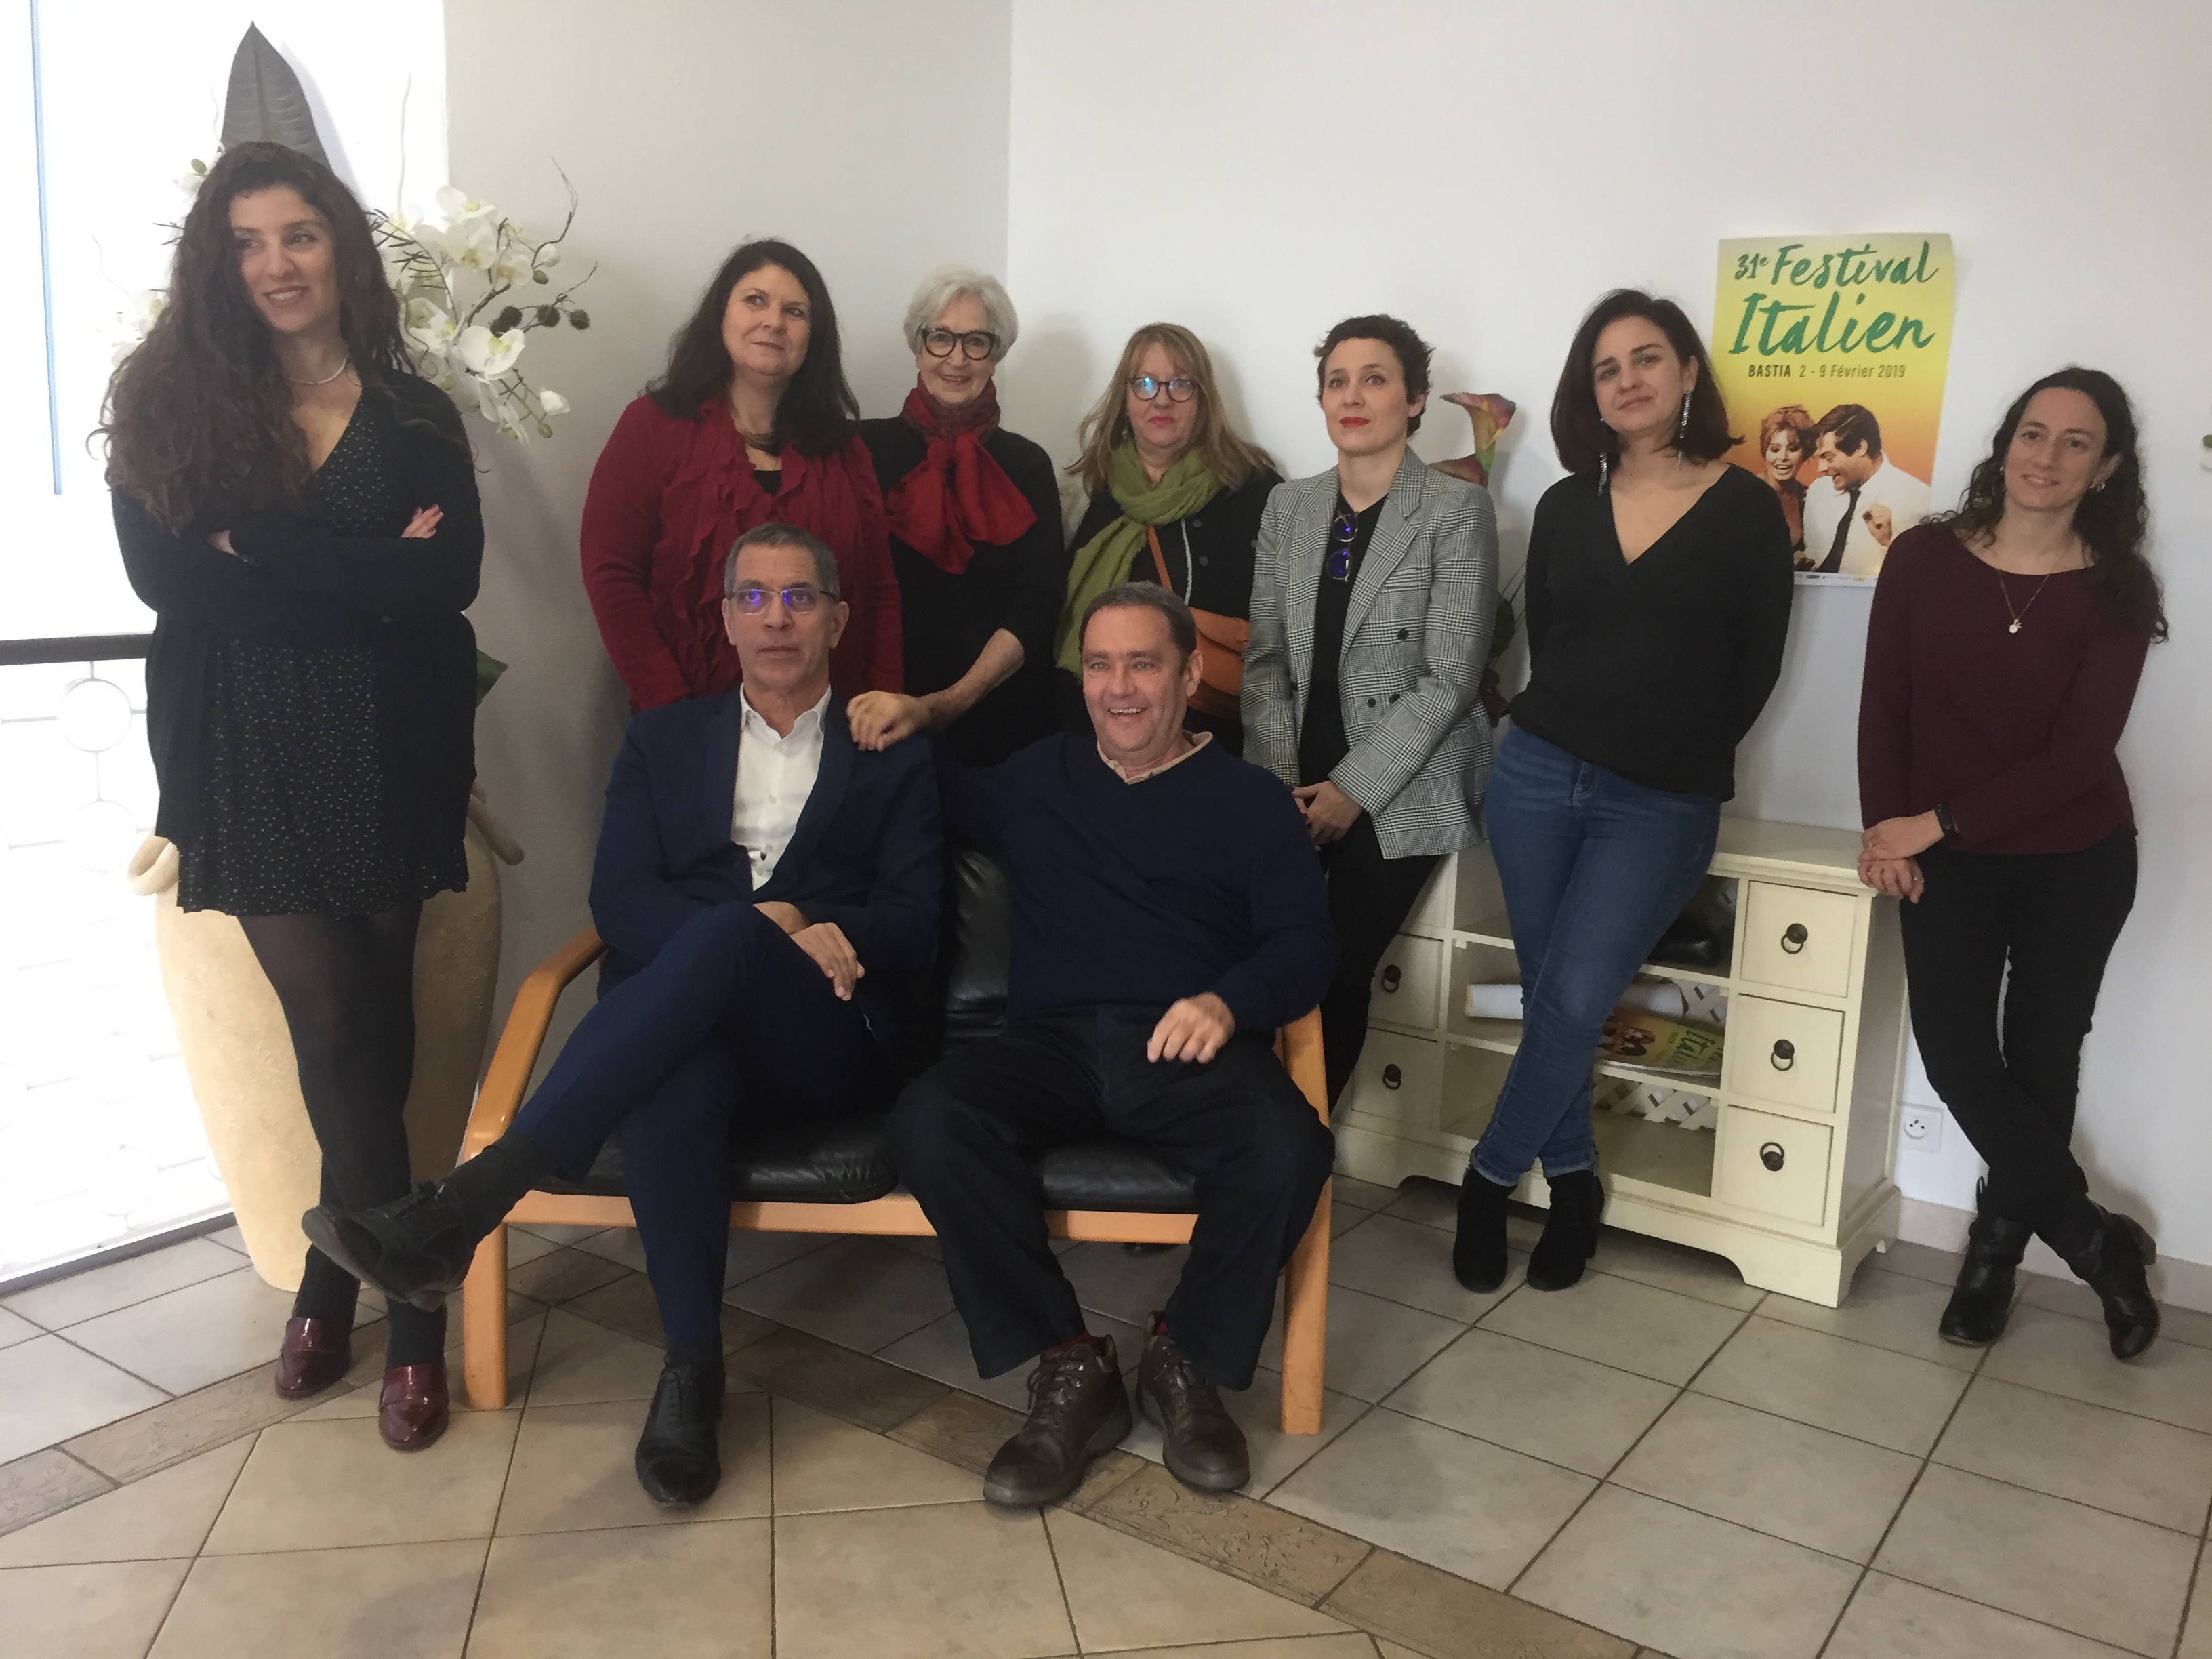 Carlo Verdone, Simonetta Greggio, Leonardo da Vinci, Thomas Bronzini et tant d’autres, invités du Festival du cinéma italien de Bastia